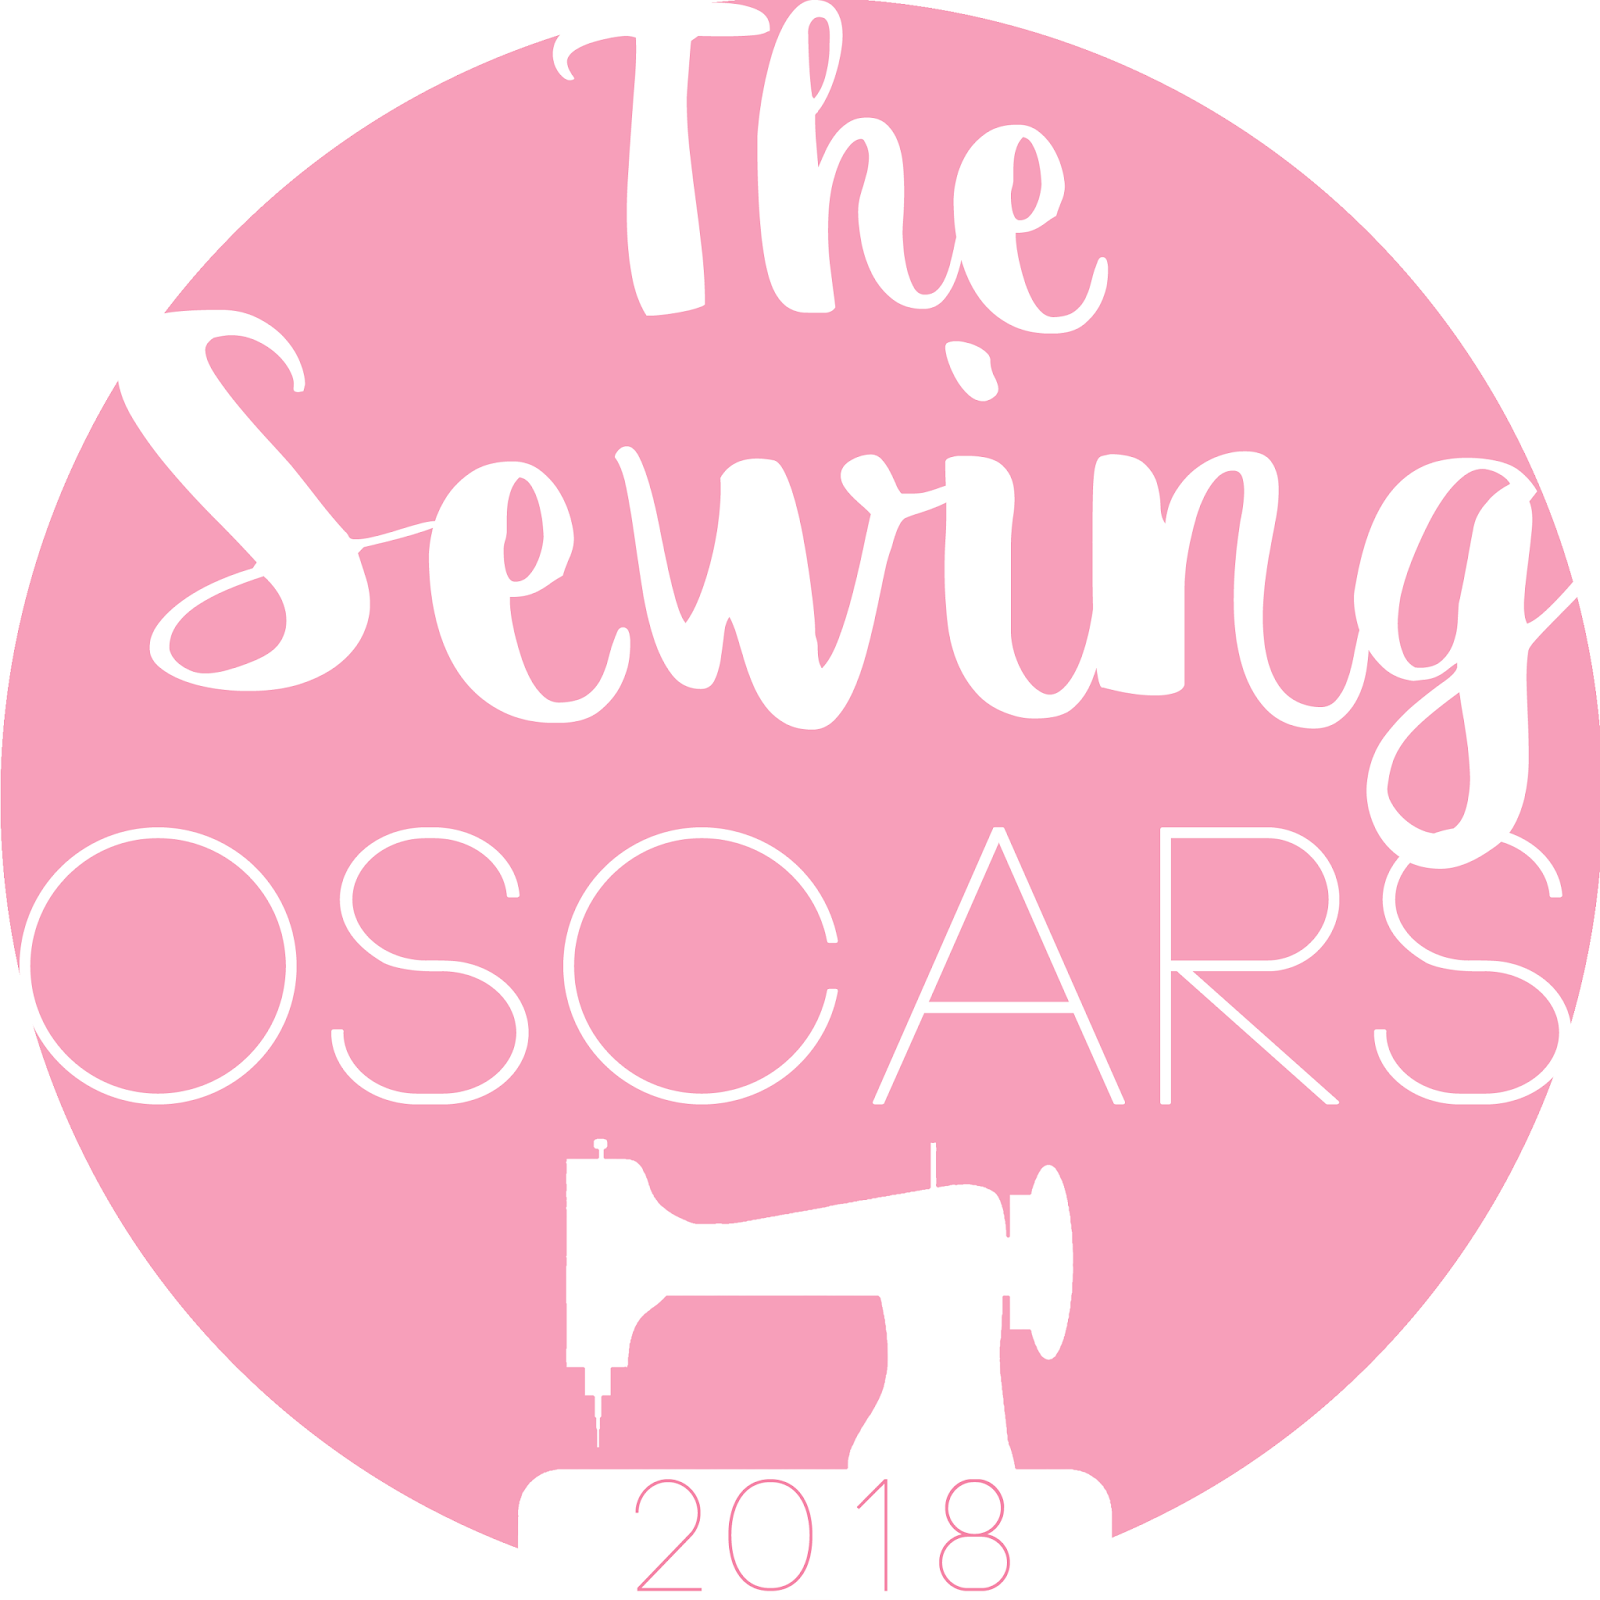 The Sewing Oscar 2018